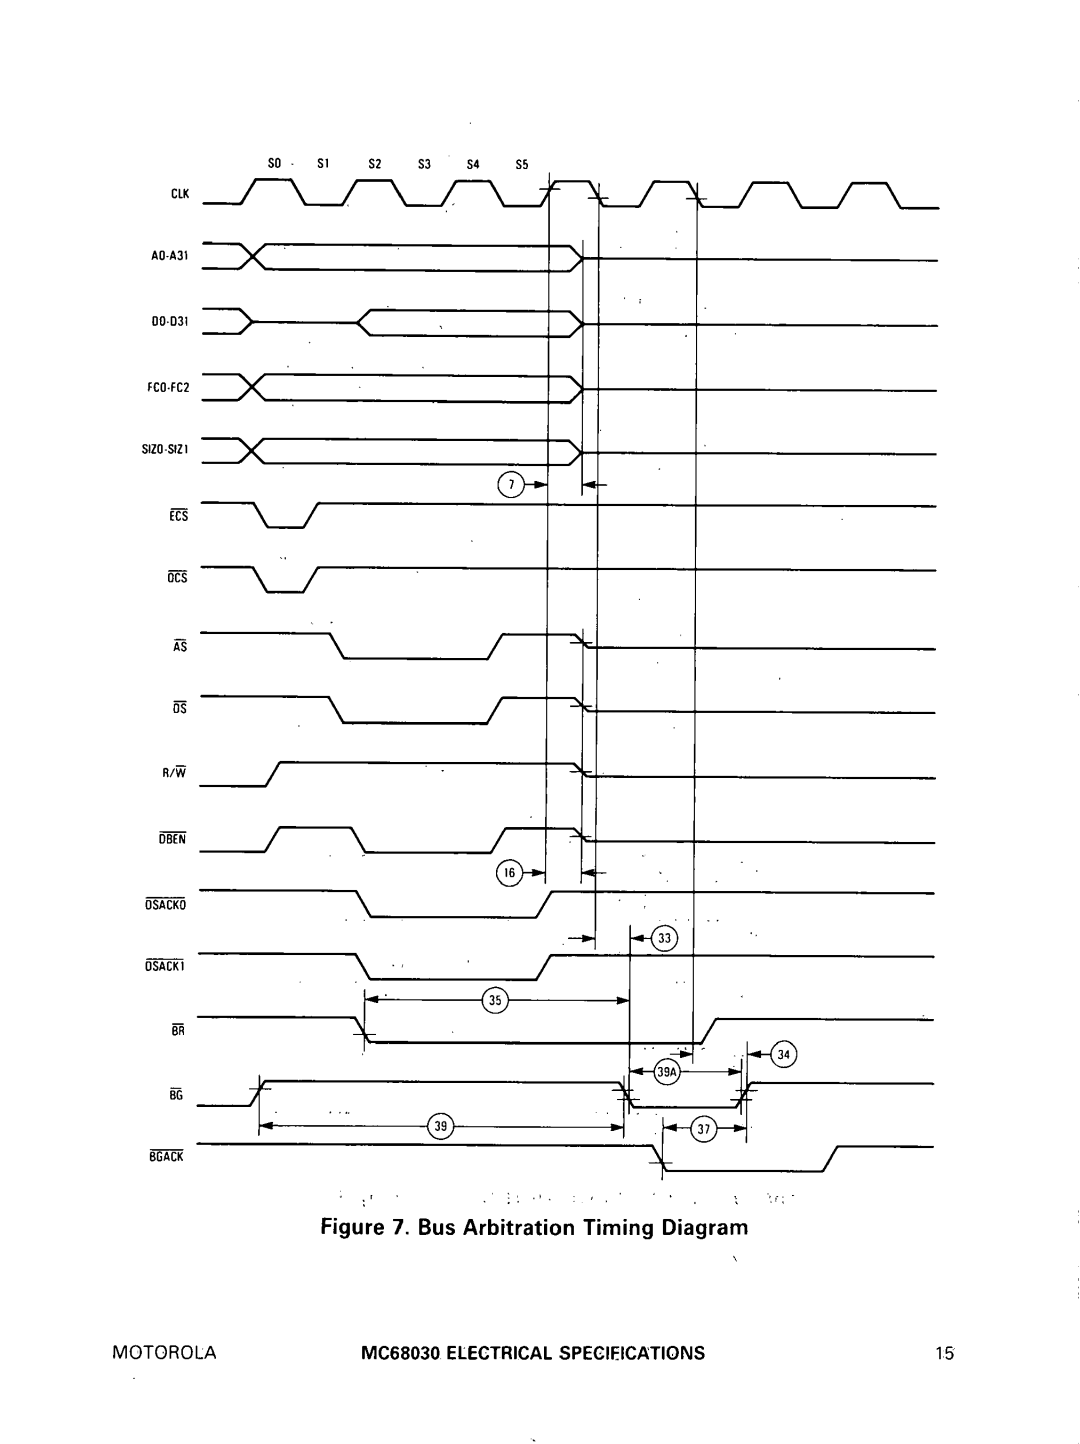 Motorola specifications Bus Arbitration Timing Diagram, Motorola, MC68030 ELECTRICAL SPECIEICATIONS, Dben 